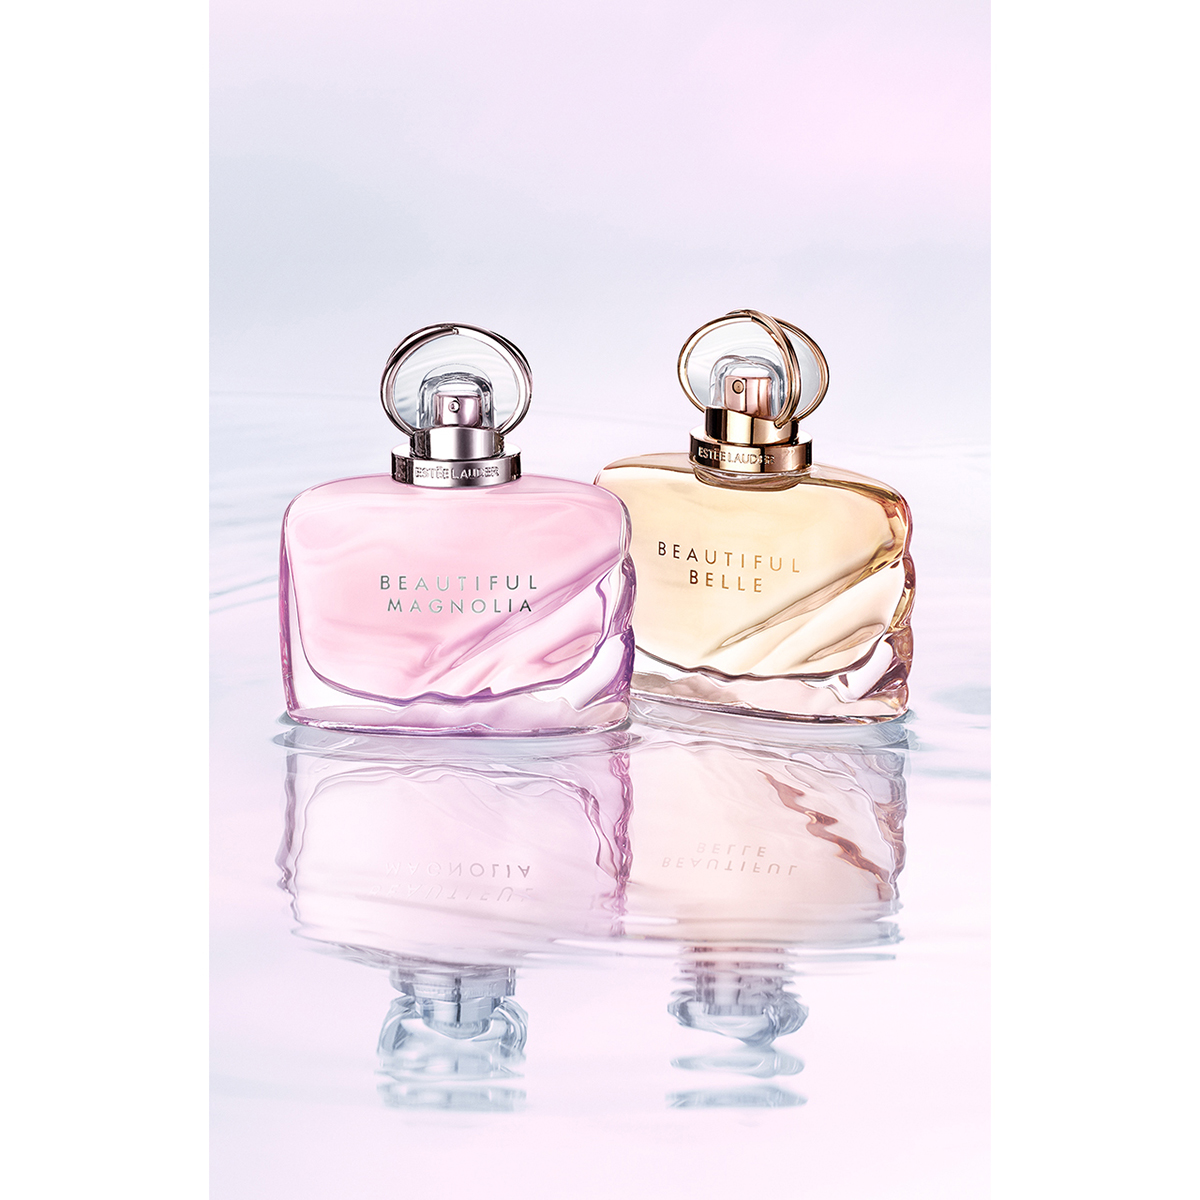 Estee Lauder(tm) Beautiful Magnolia Eau De Parfum